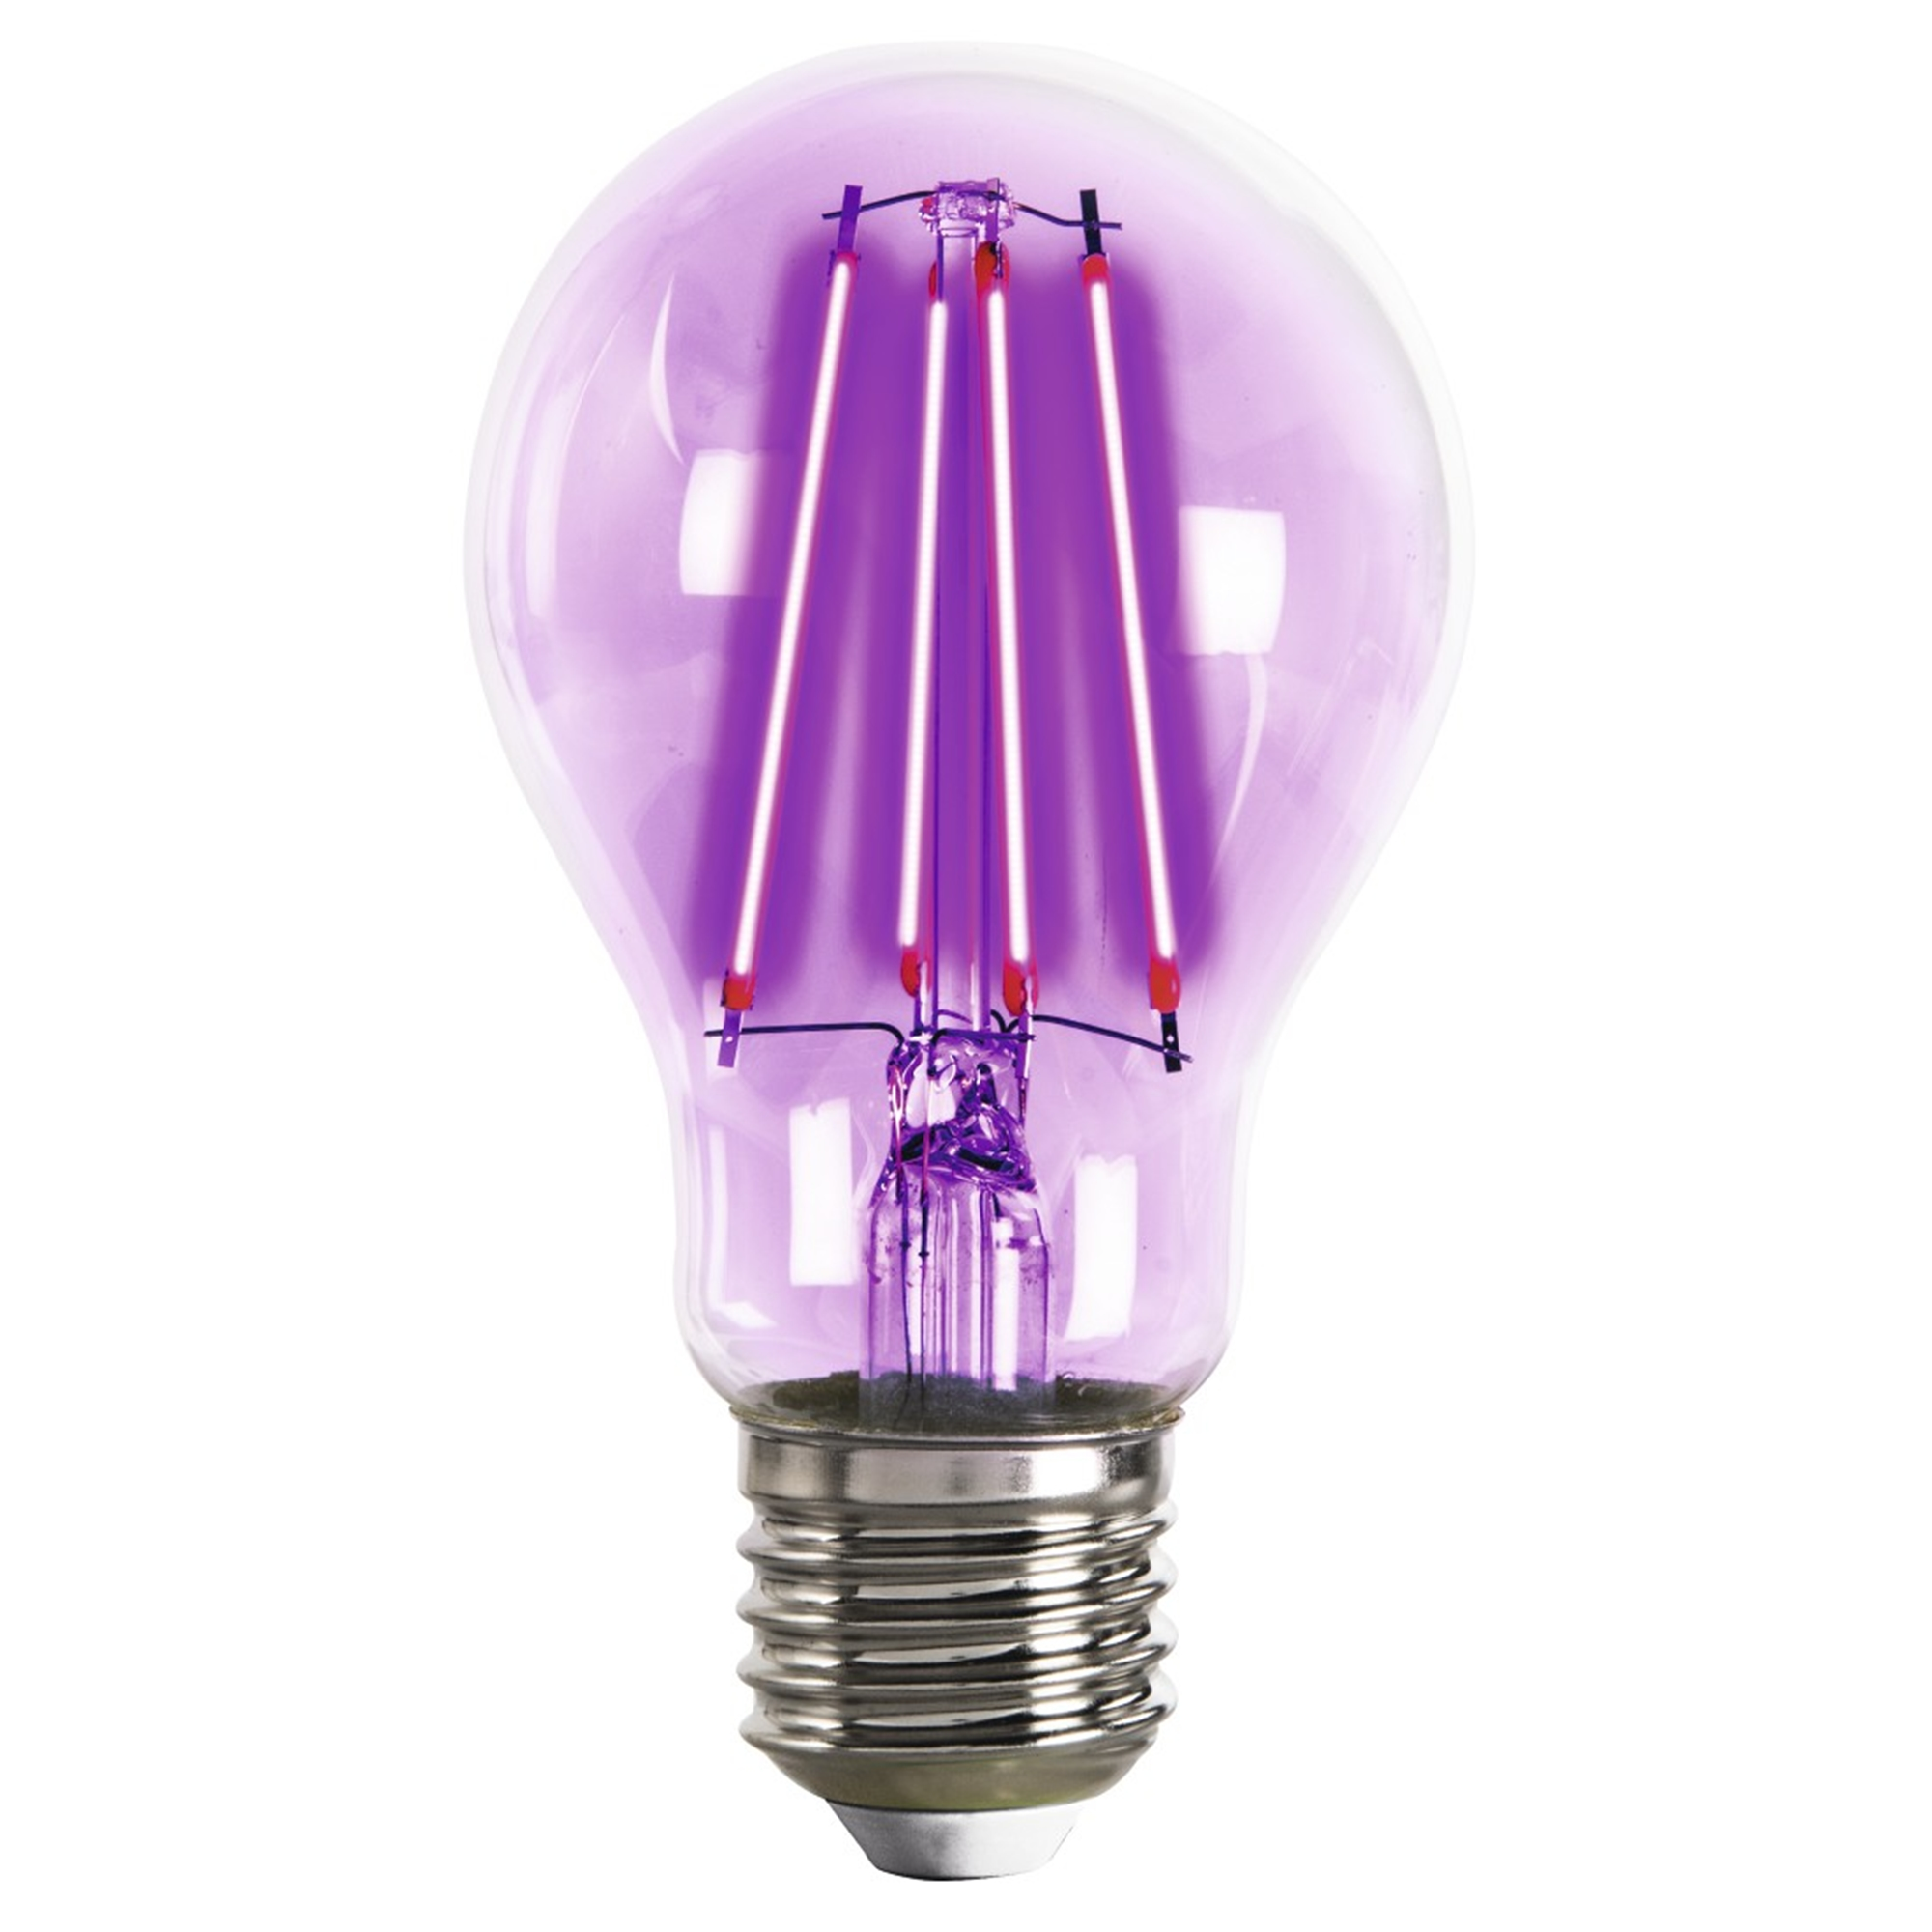 Pflanzen-Wachstumslampe, XAVAX E27, 8W E27 LED-Lampe Violett